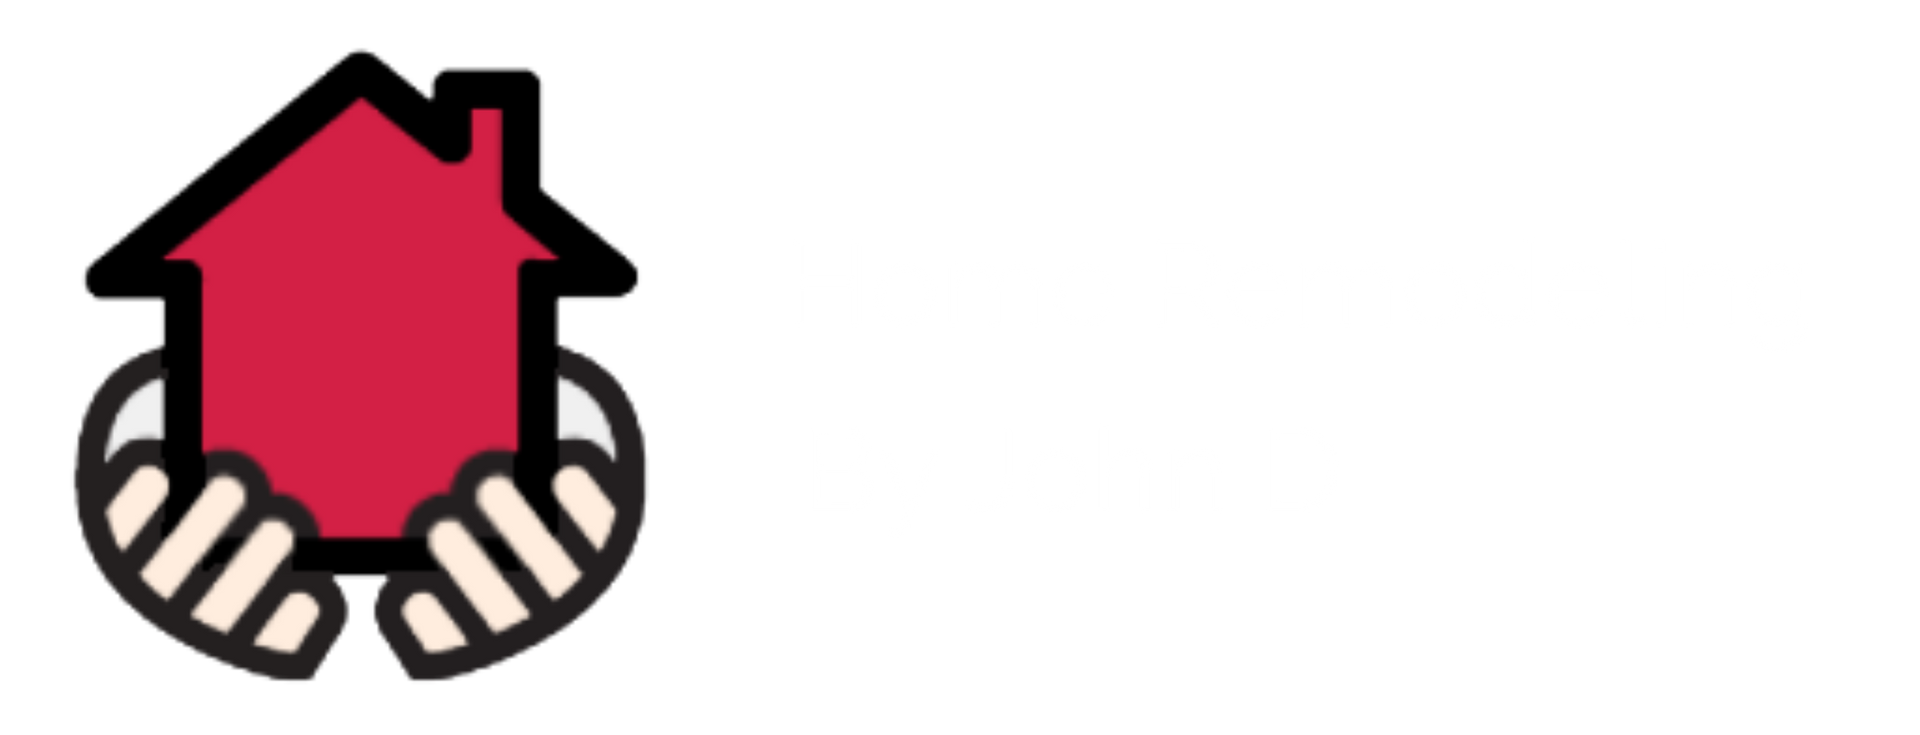 Home Remodeling By John D logo